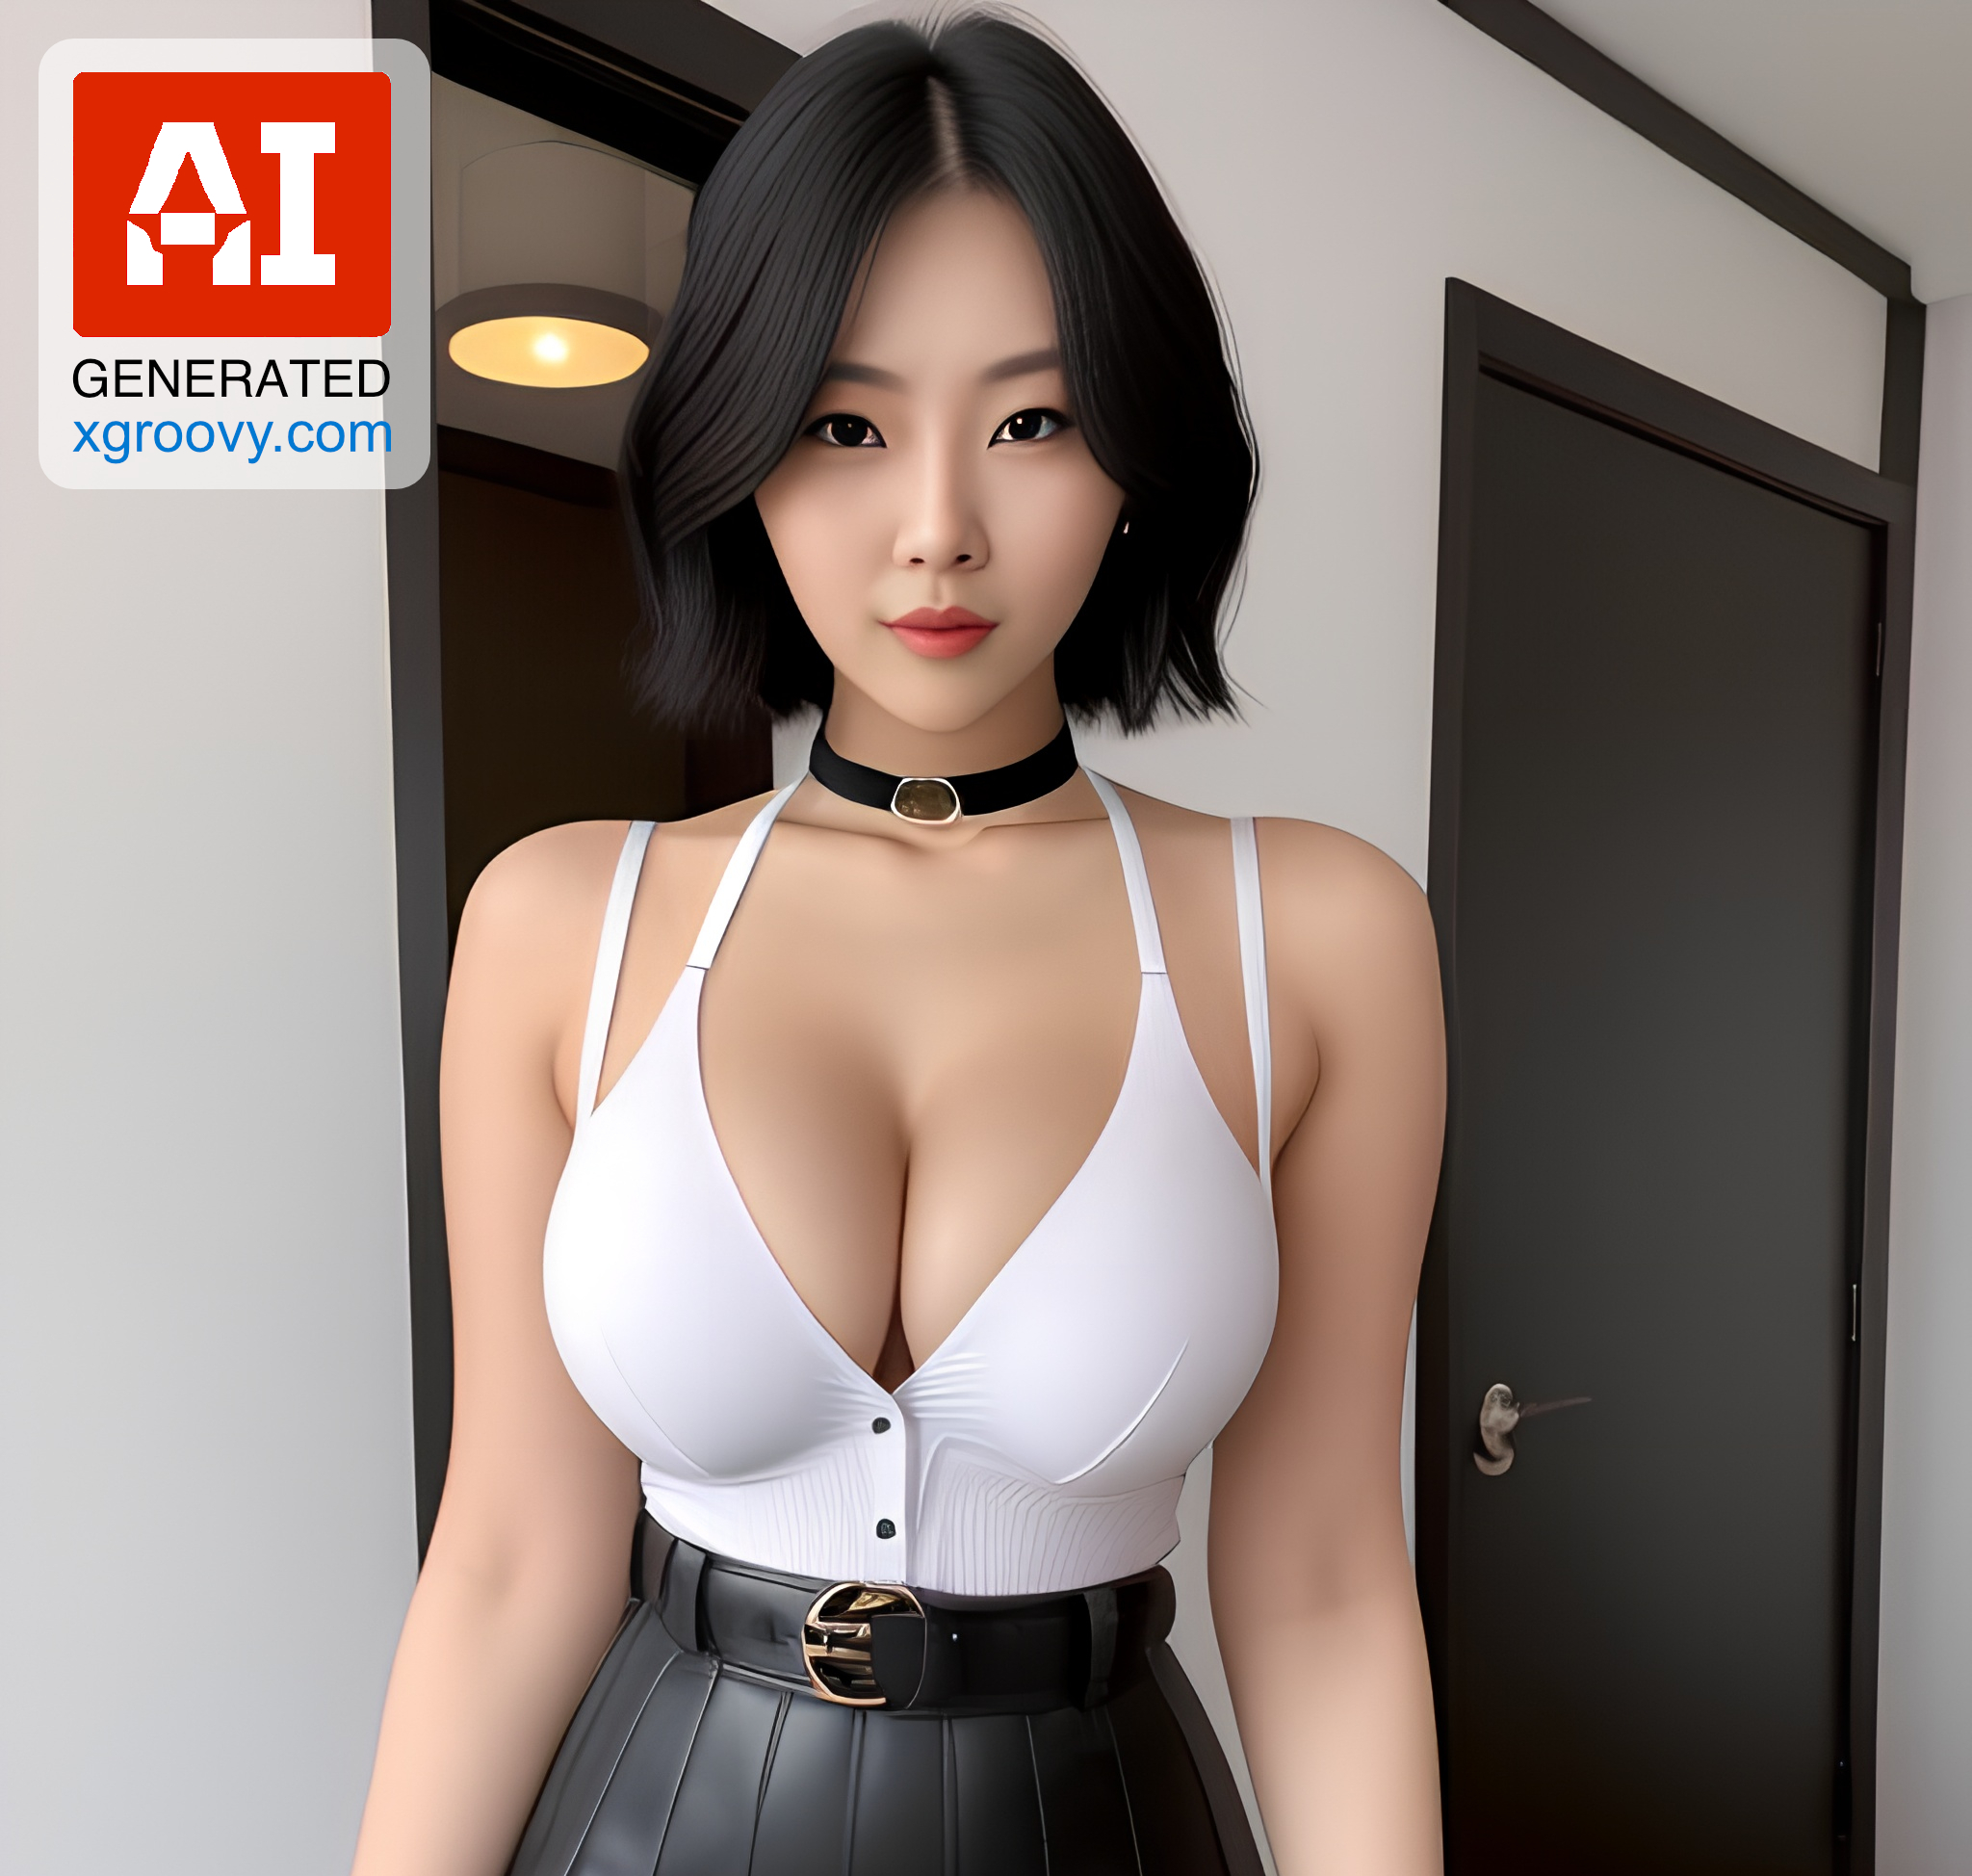 Huge Cock Big Tits Skirt - Korean beauty, short hair, big hips, perfect body in a mini skirt & choker.  I'd